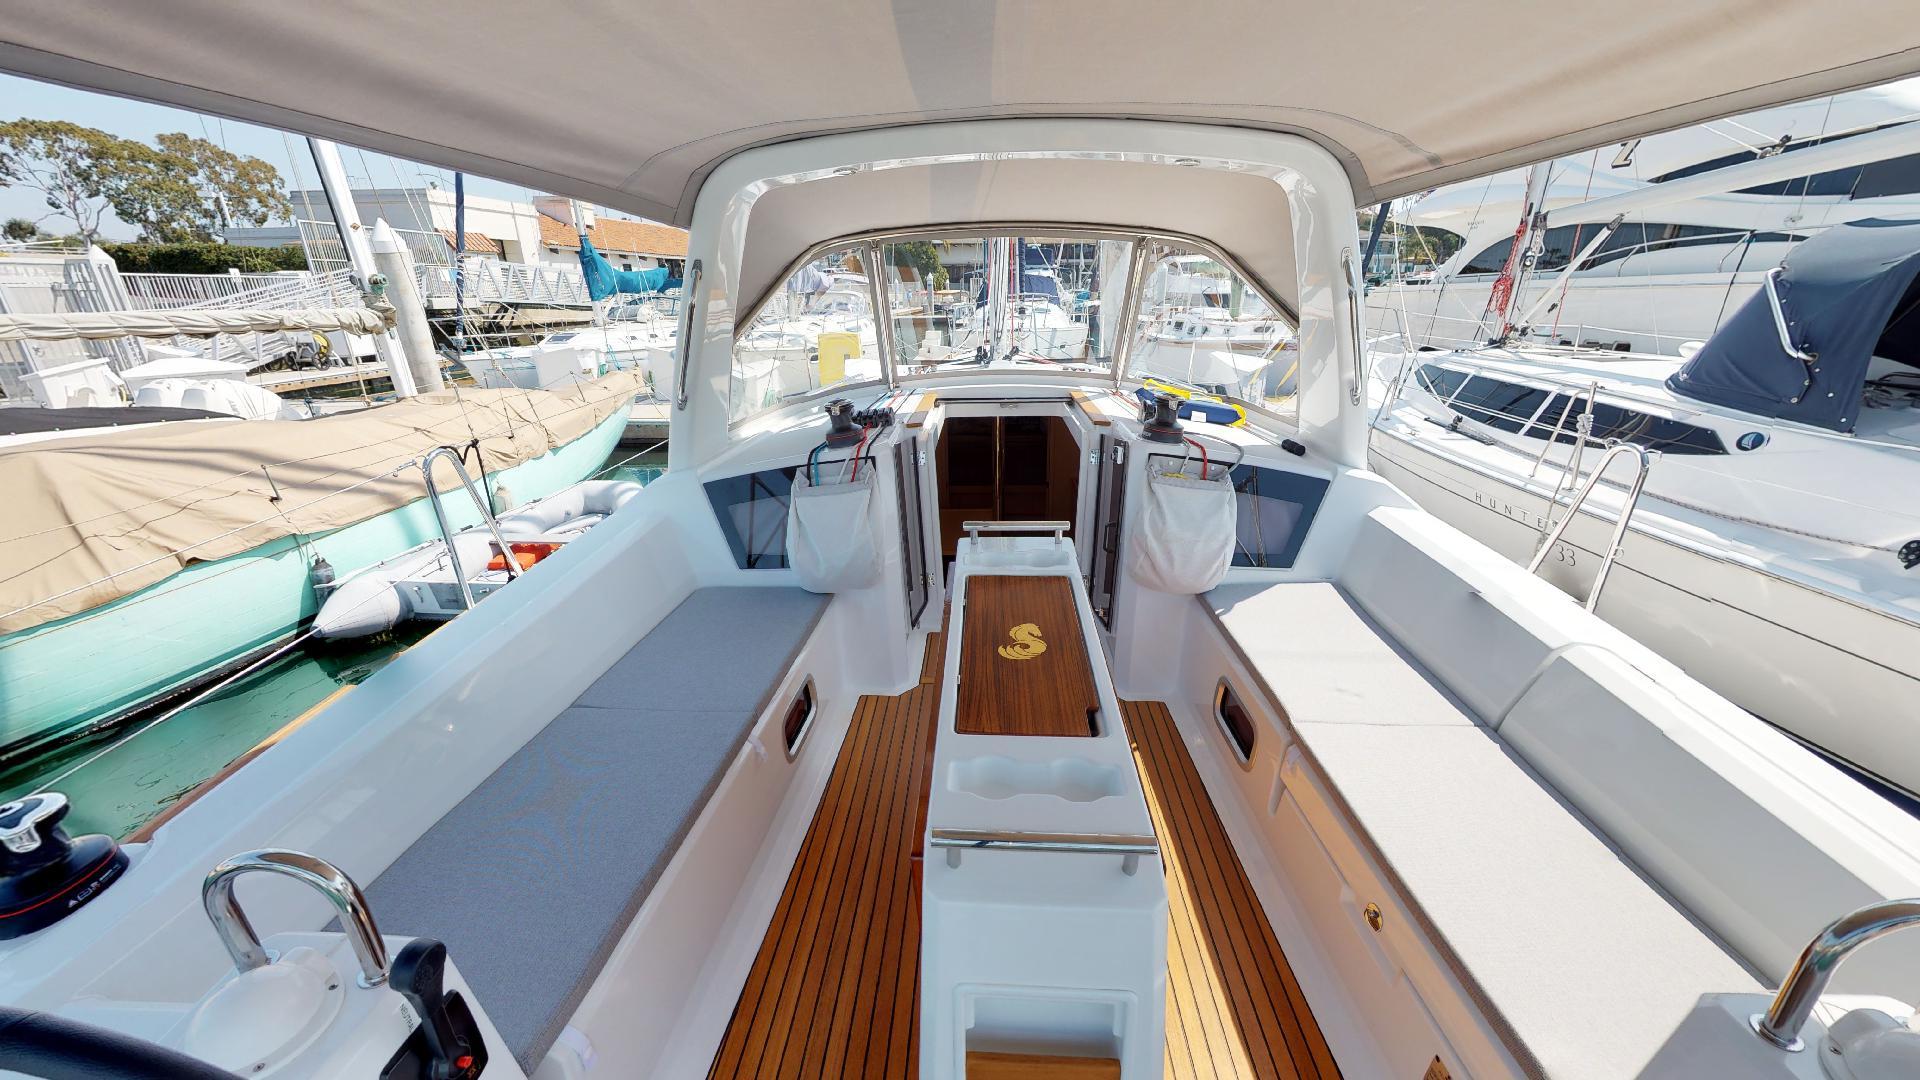 38′ Beneteau 2019 Yacht for Sale